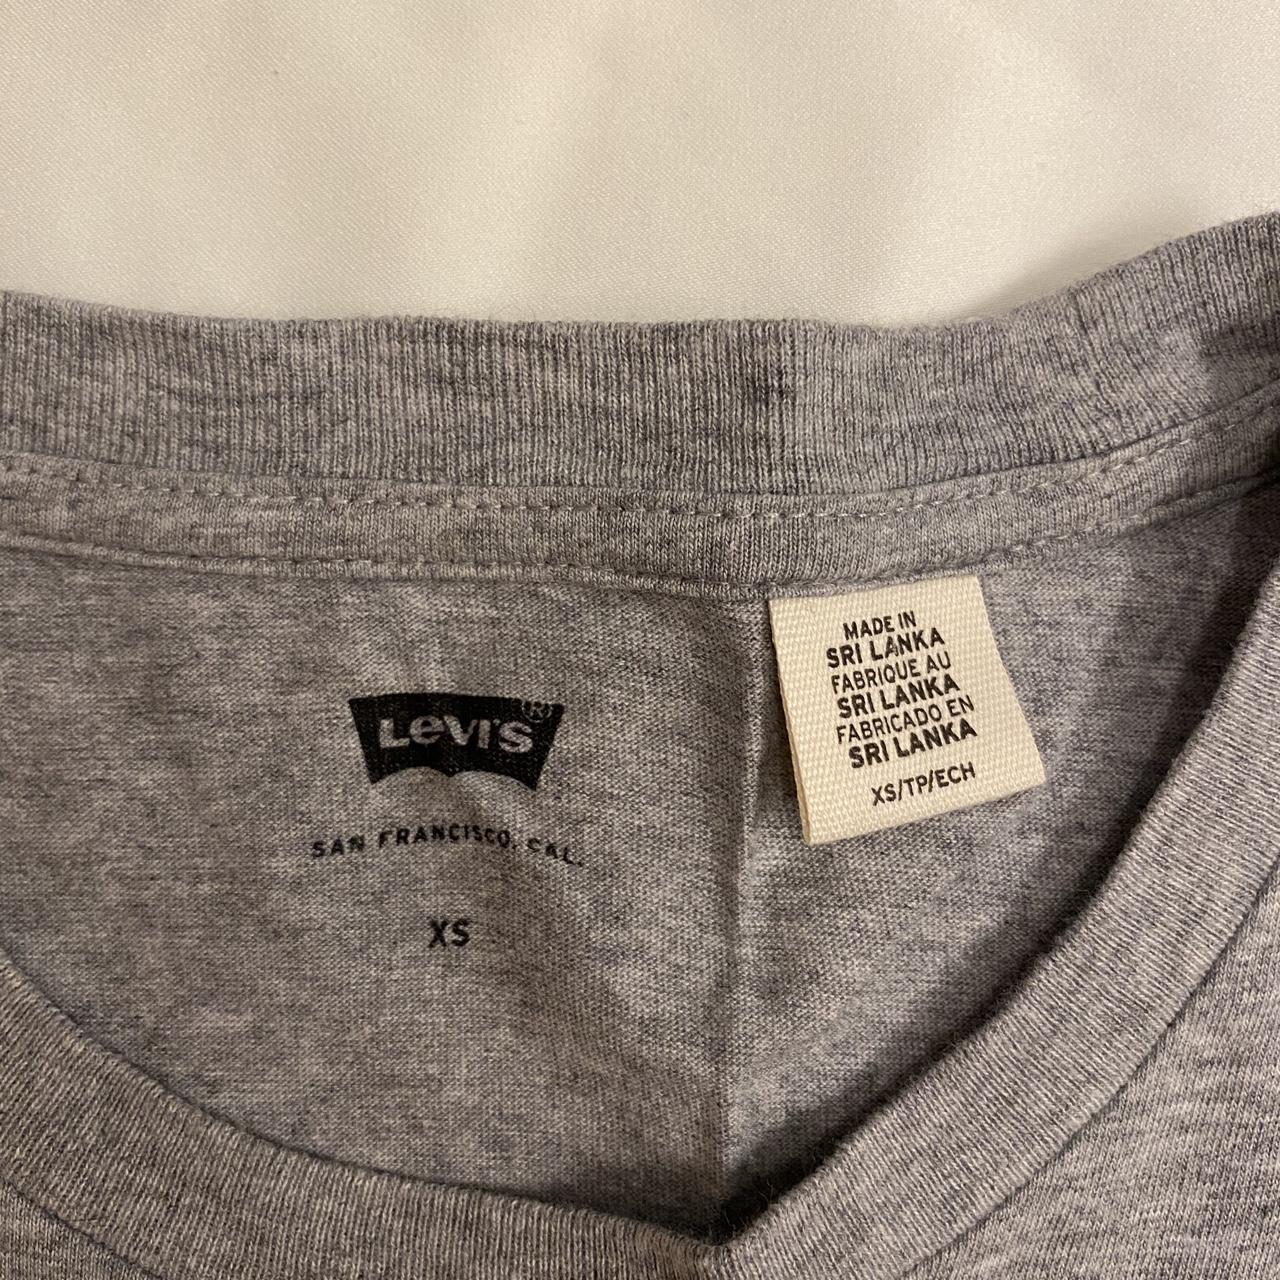 Levi’s grey logo t shirt RRP £25 Size XS -... - Depop